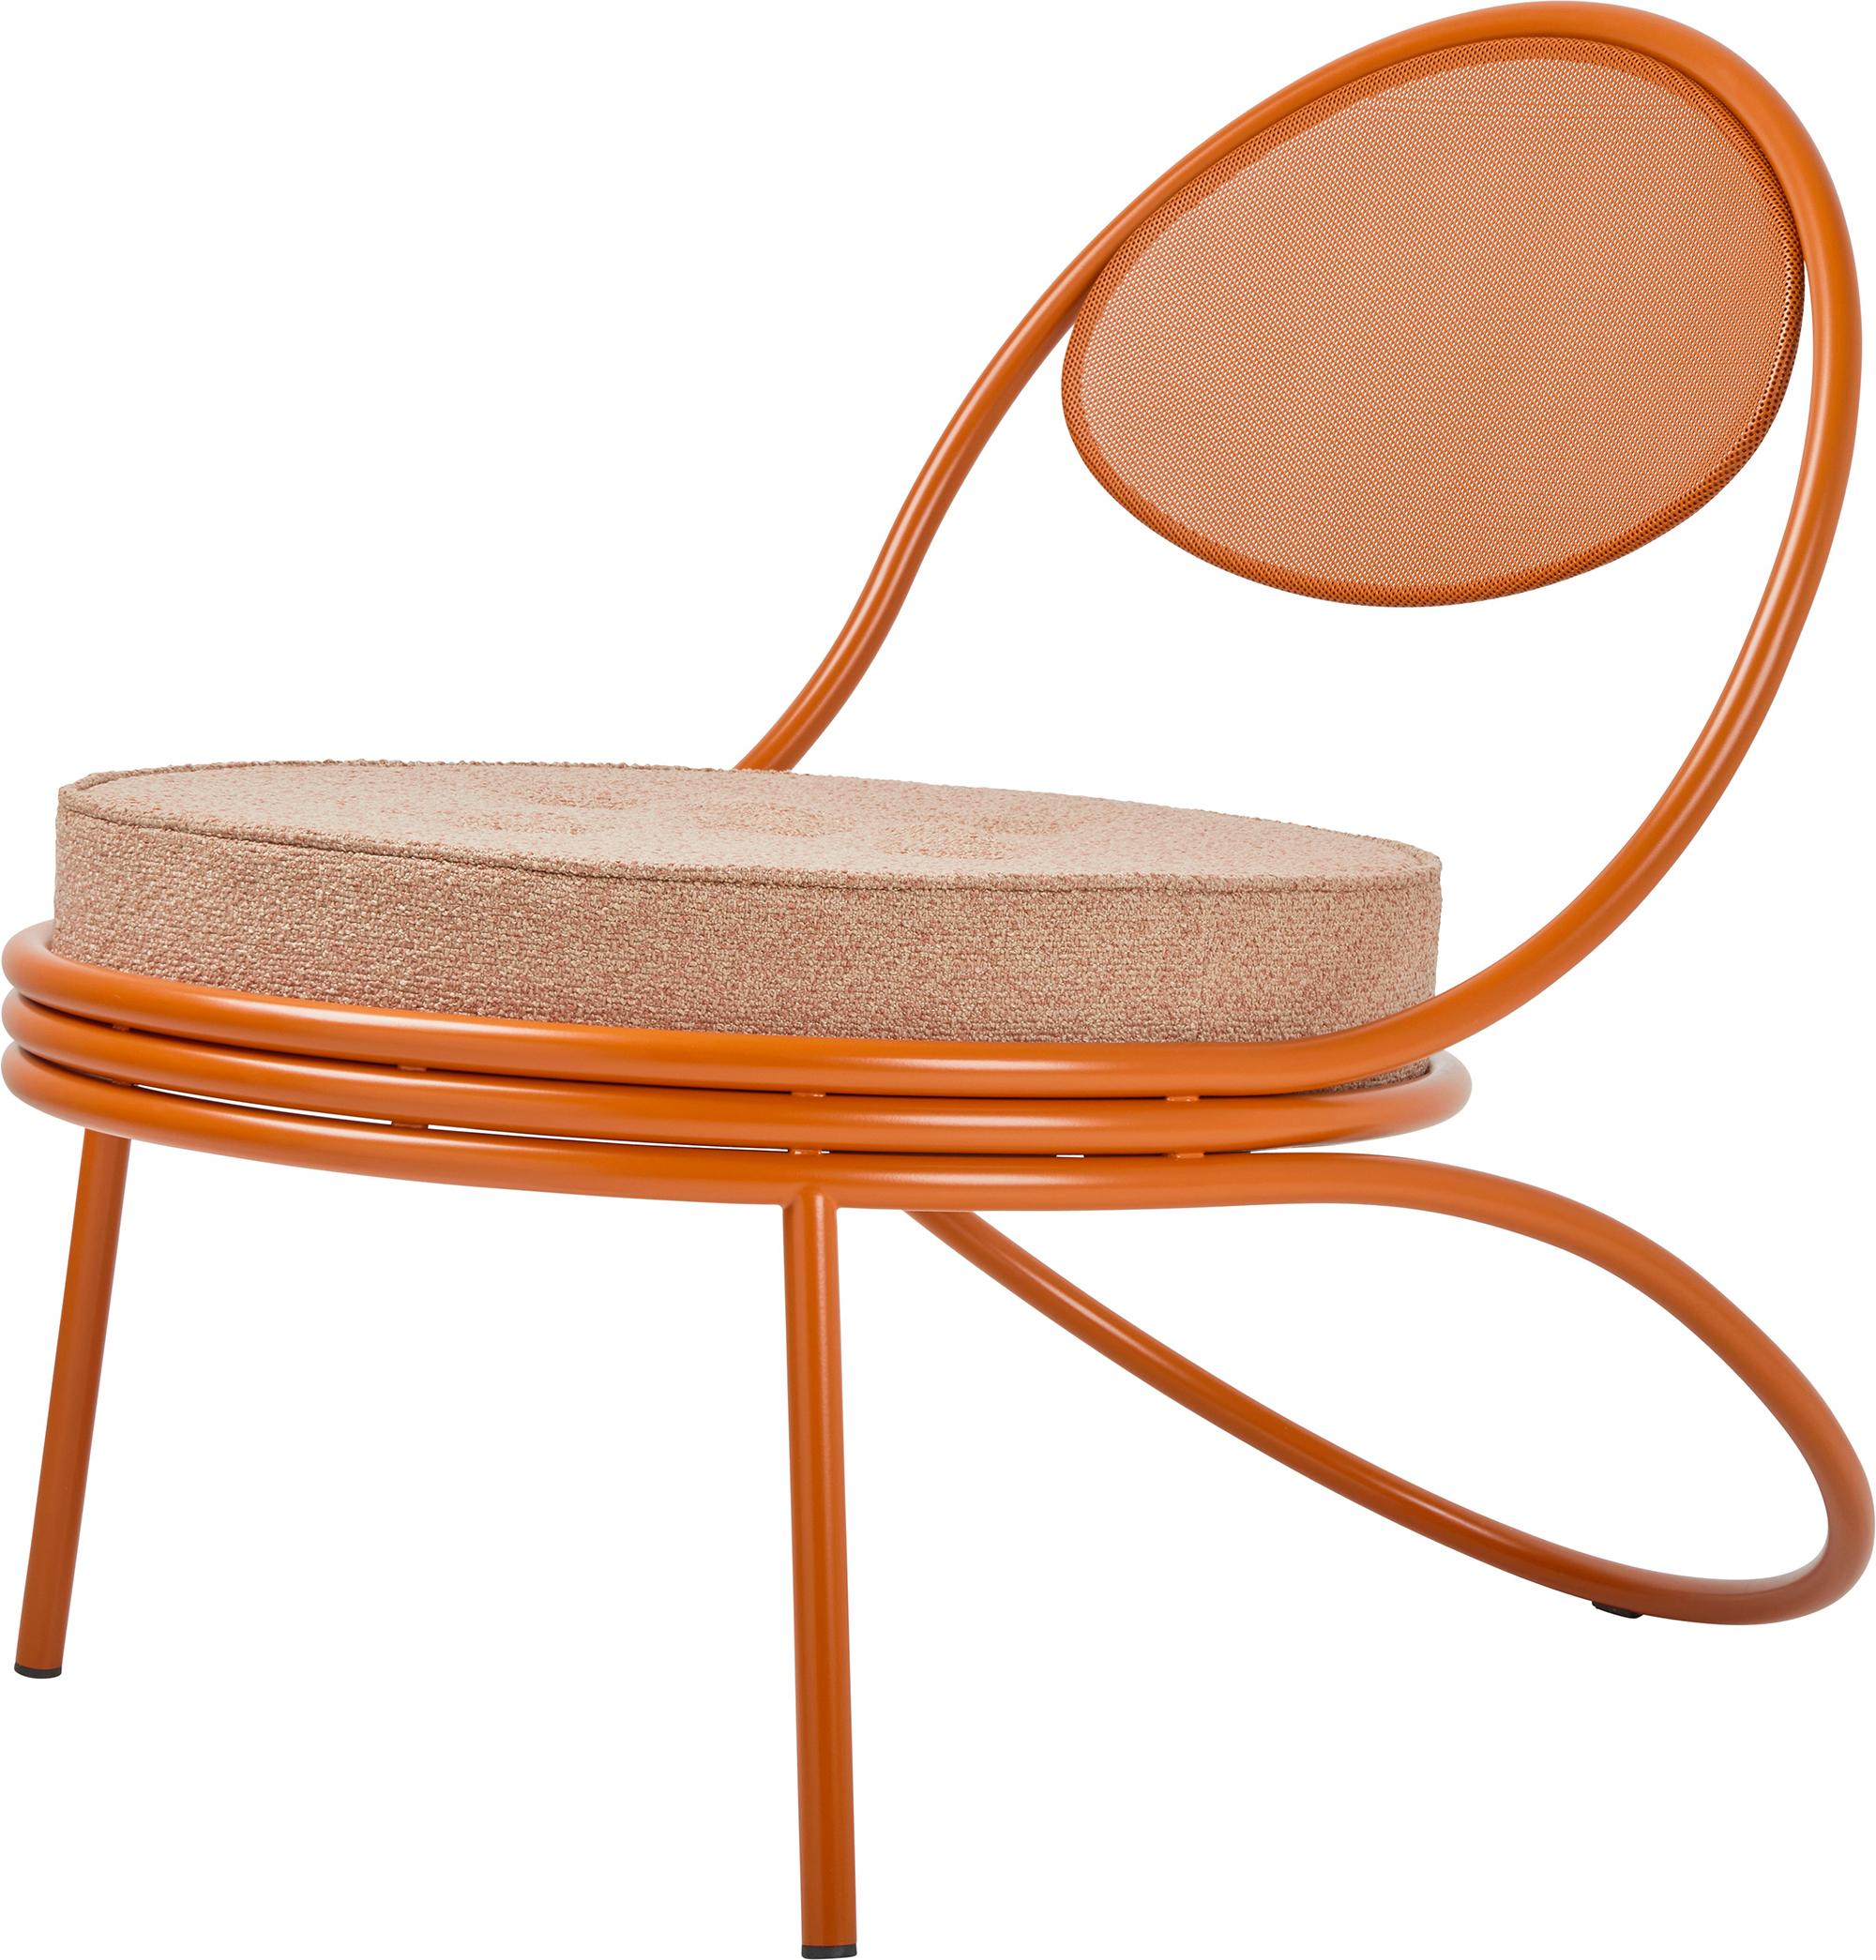 'Copacabana' Indoor Outdoor Lounge Chair by Mathieu Matégot in Lorkey Fabric For Sale 6